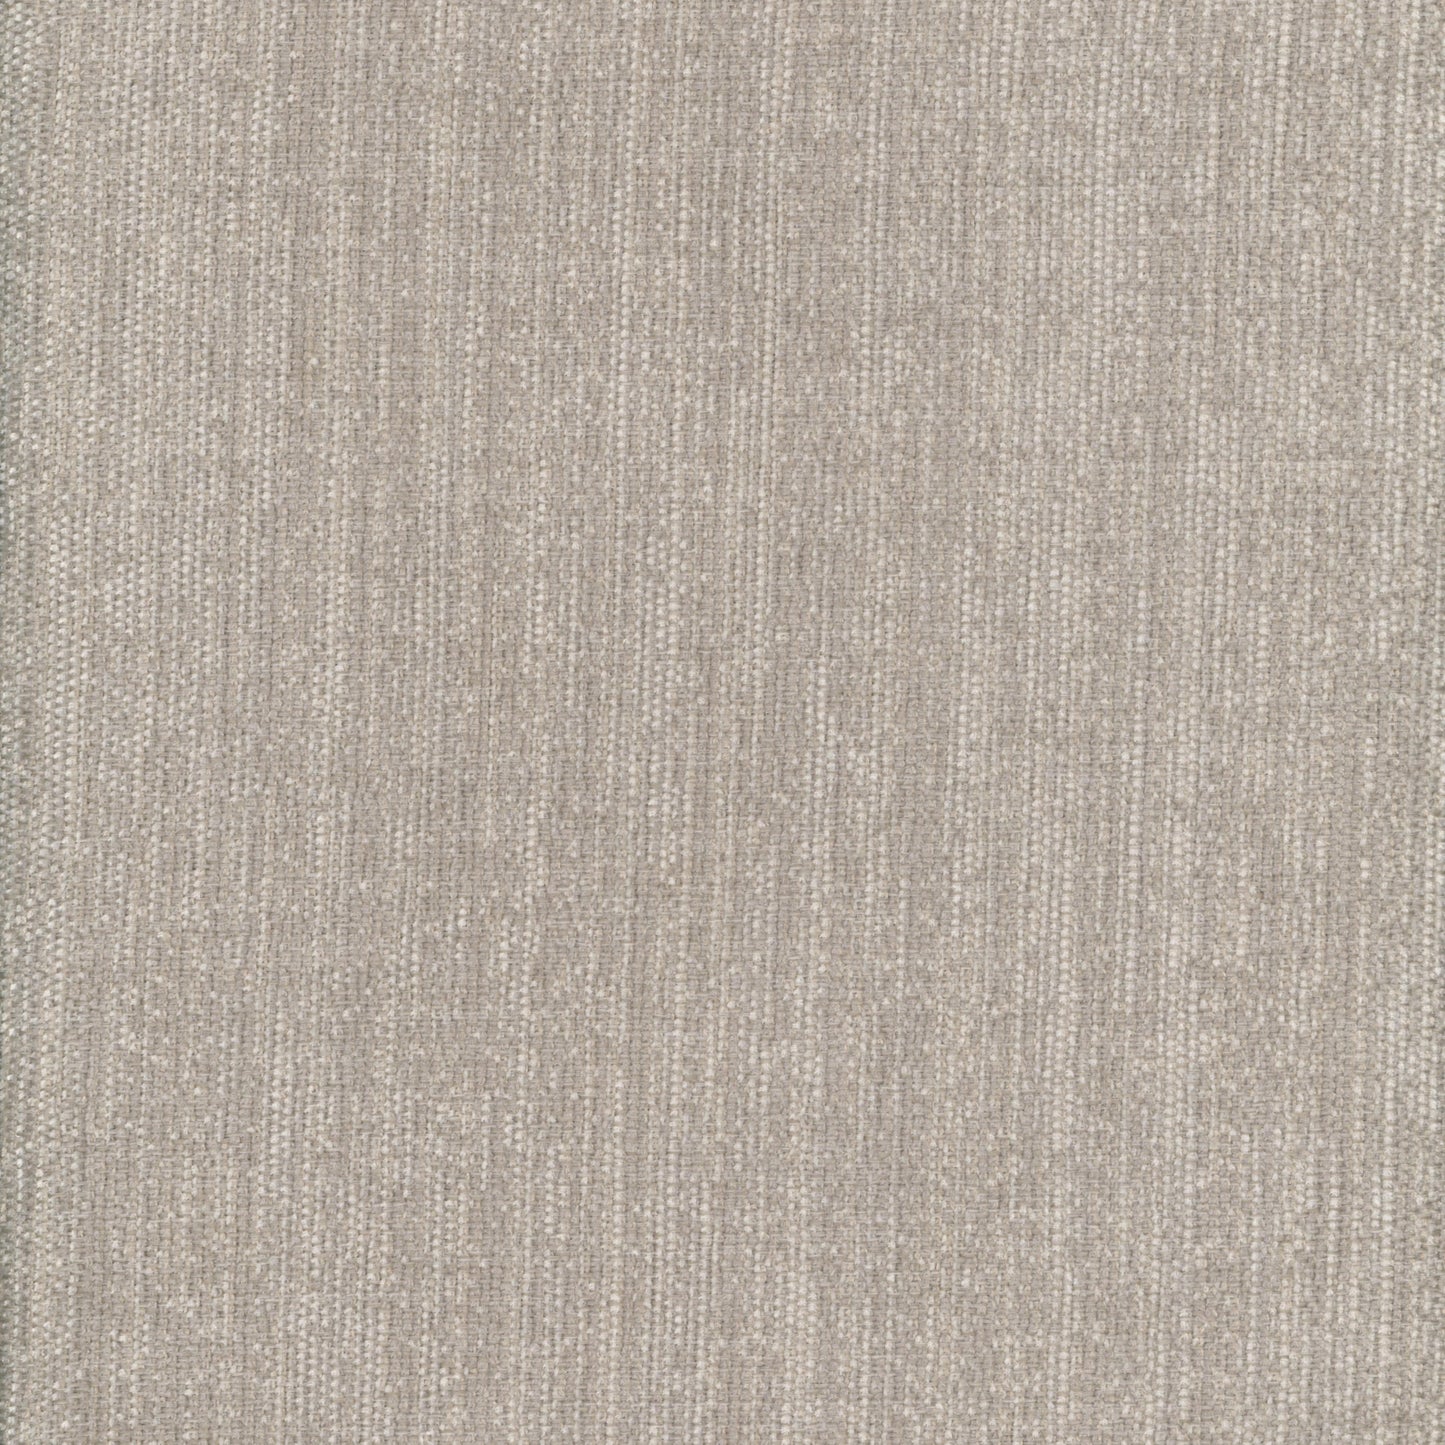 4857-15 Fabric - Stickley Brand